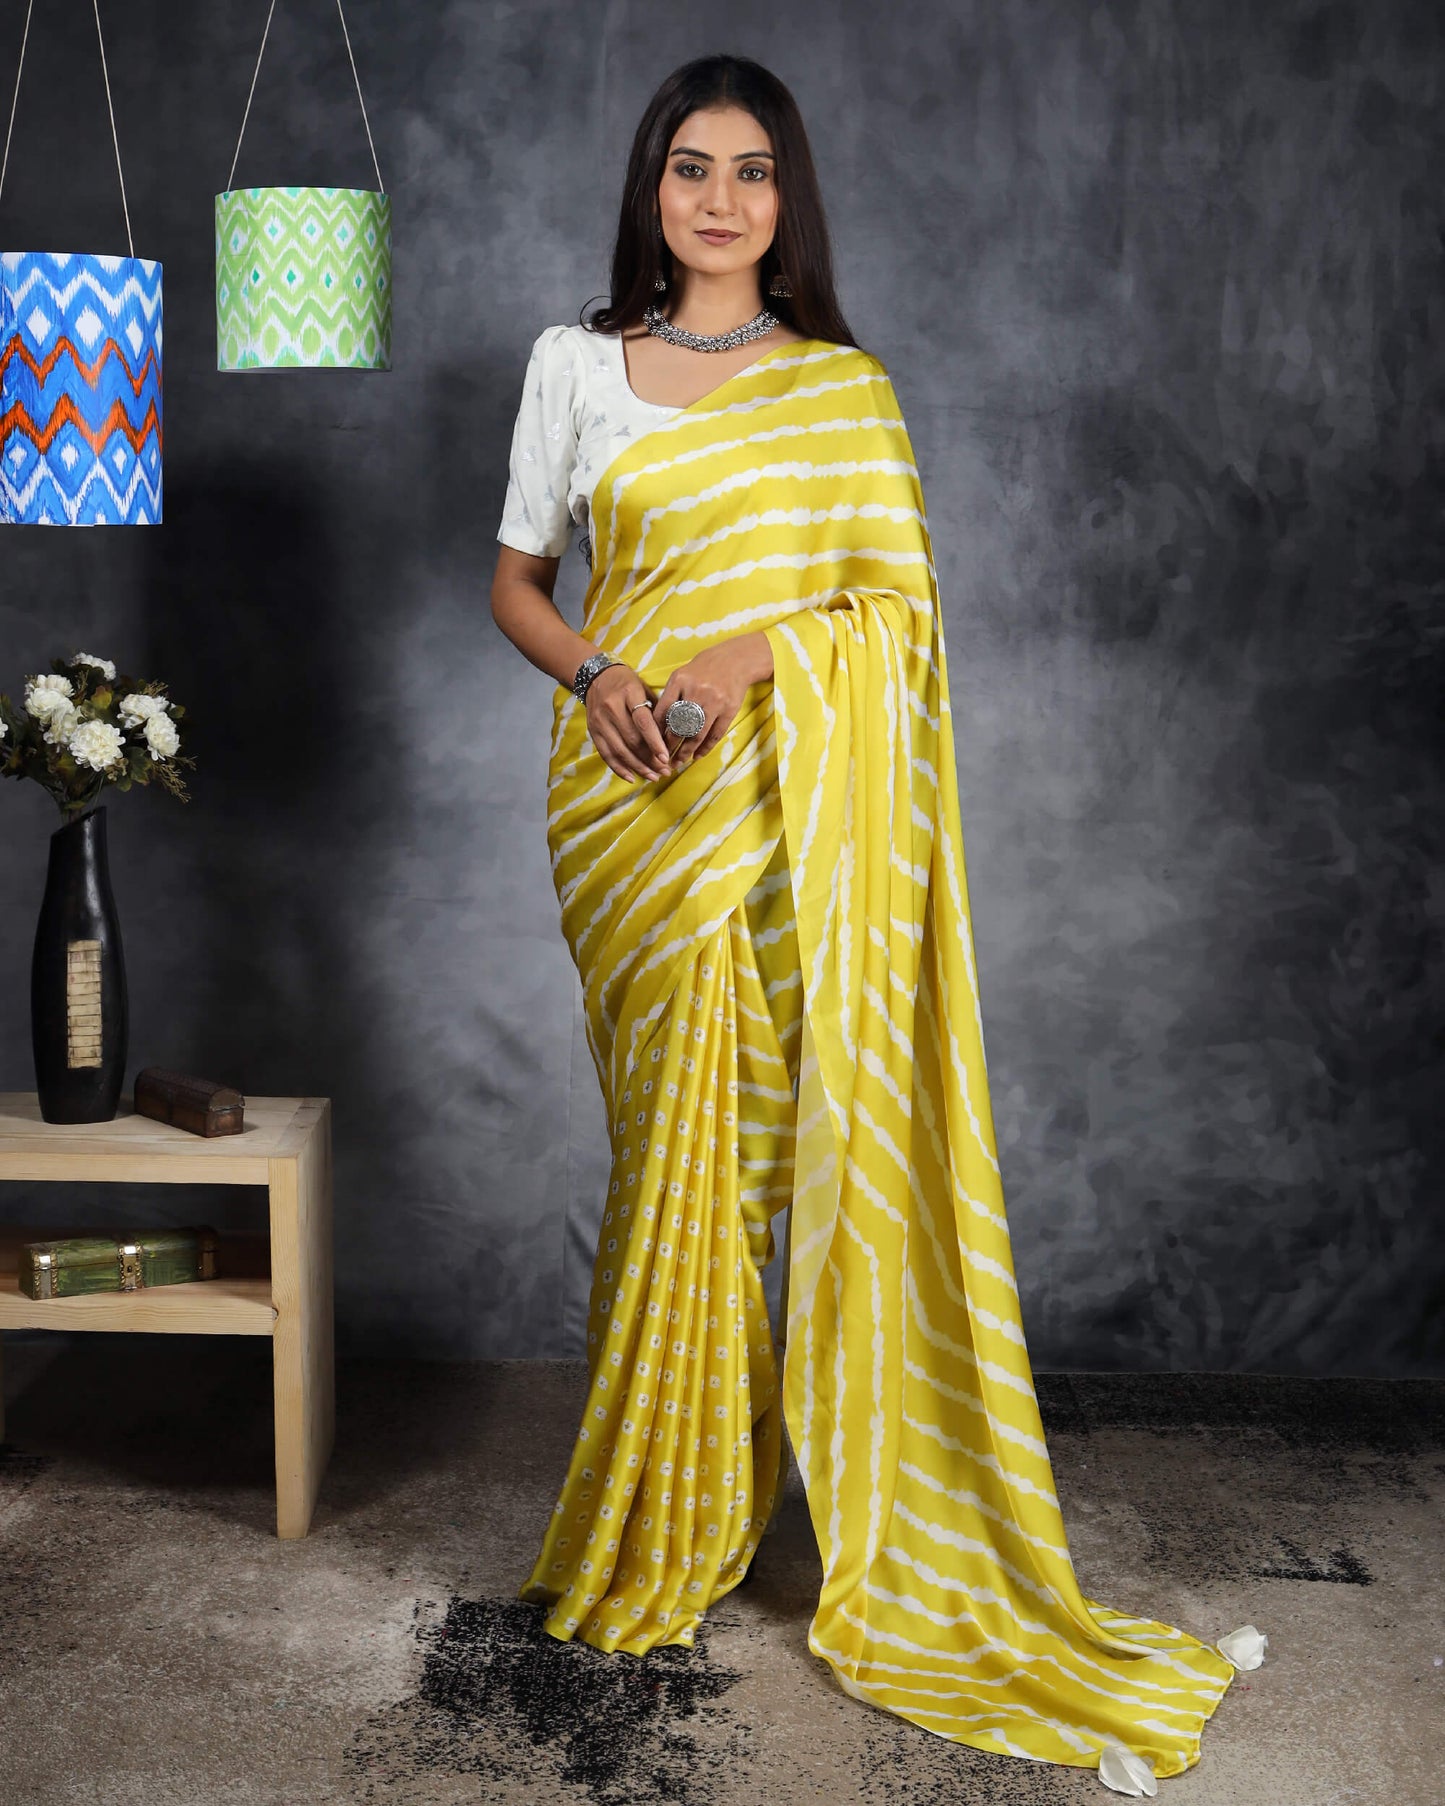 Royal Yellow And White Leheriya Pattern Digital Print Georgette Satin Pre-Draped Saree With Tassels